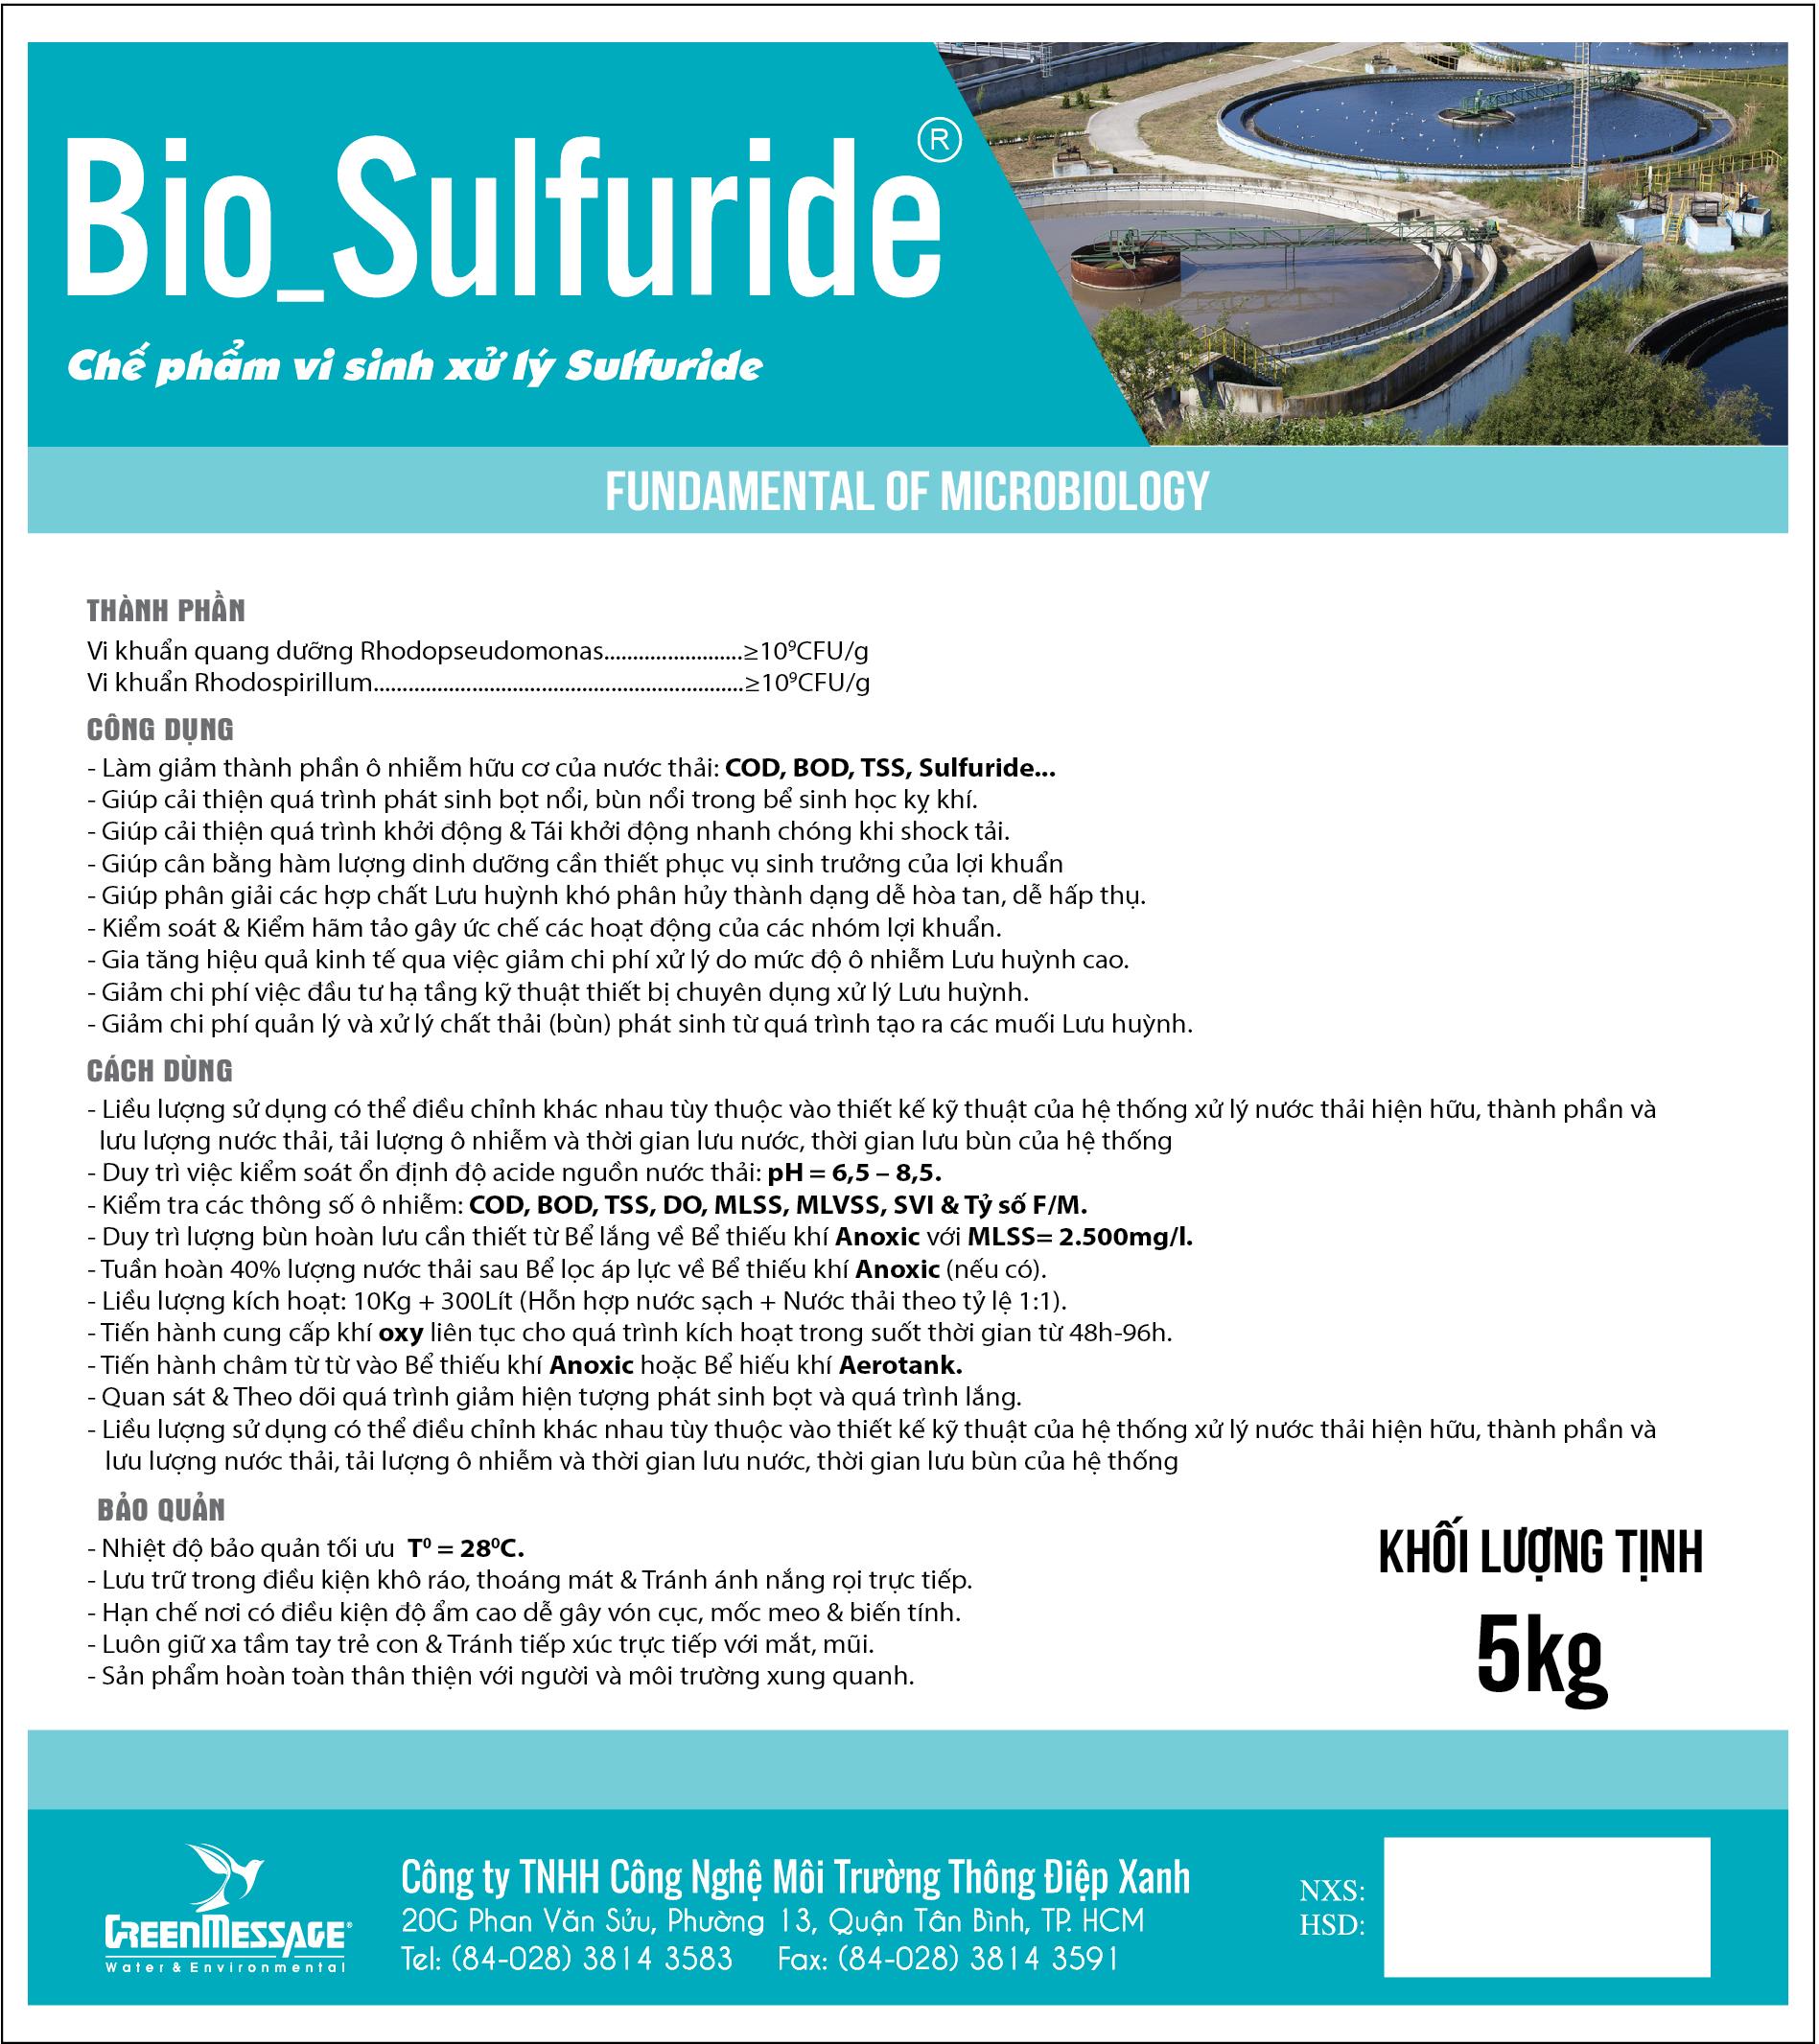 Bio_Sulfulride - Chế phẩm vi sinh xử lý Sulfuride